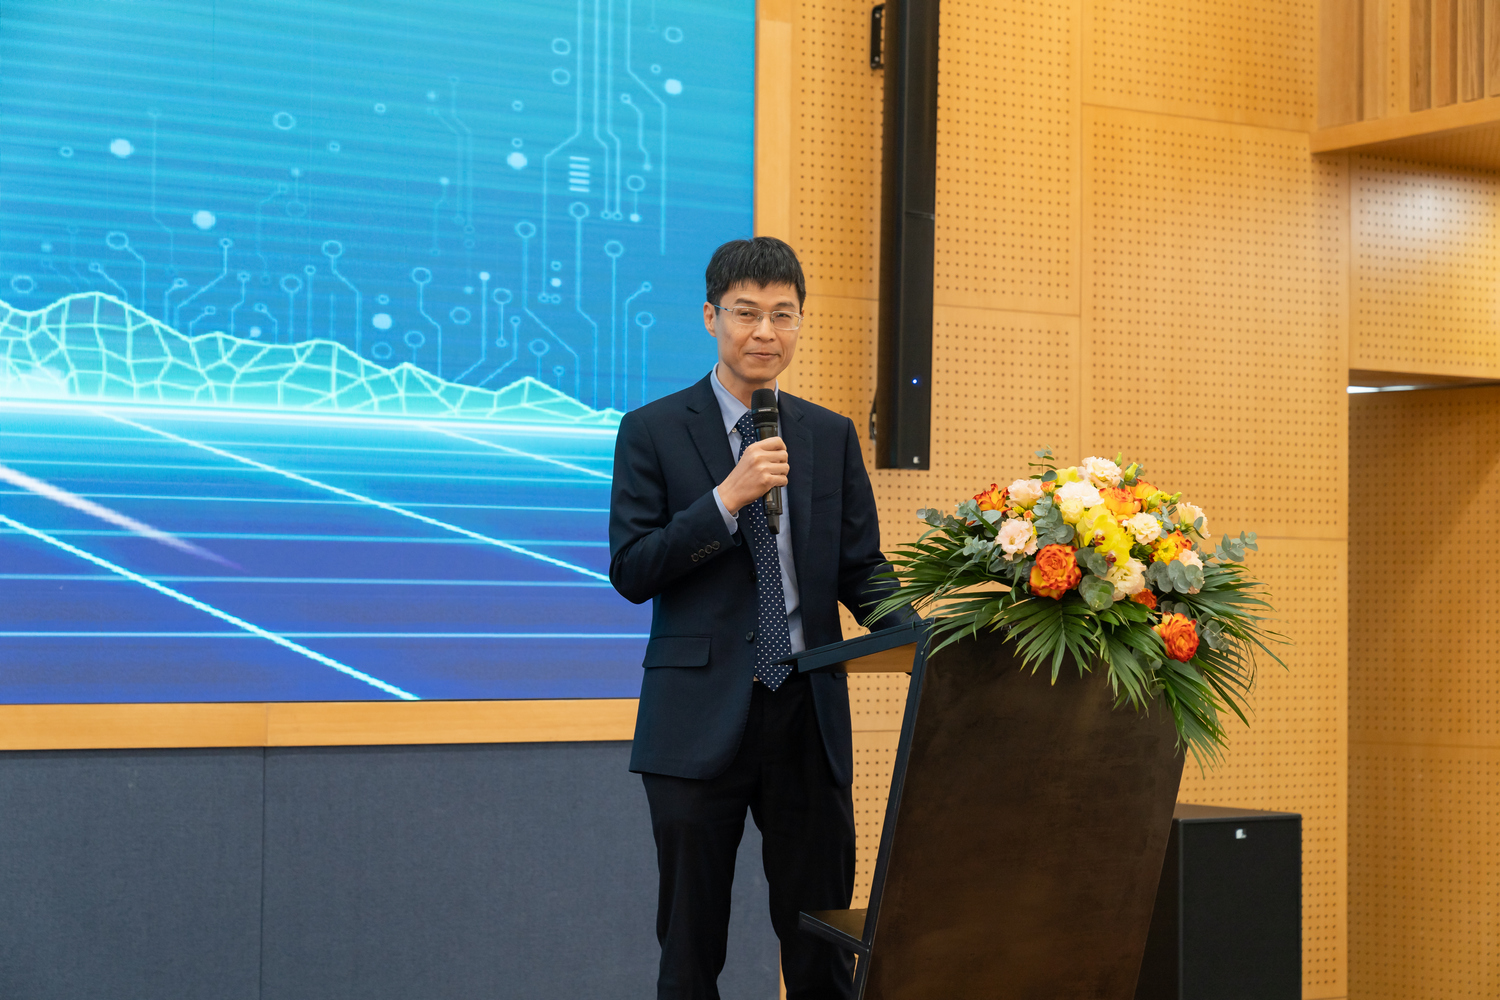 Prof. Dr. Tu Minh Phuong - PTIT Chairman - spoke at the event